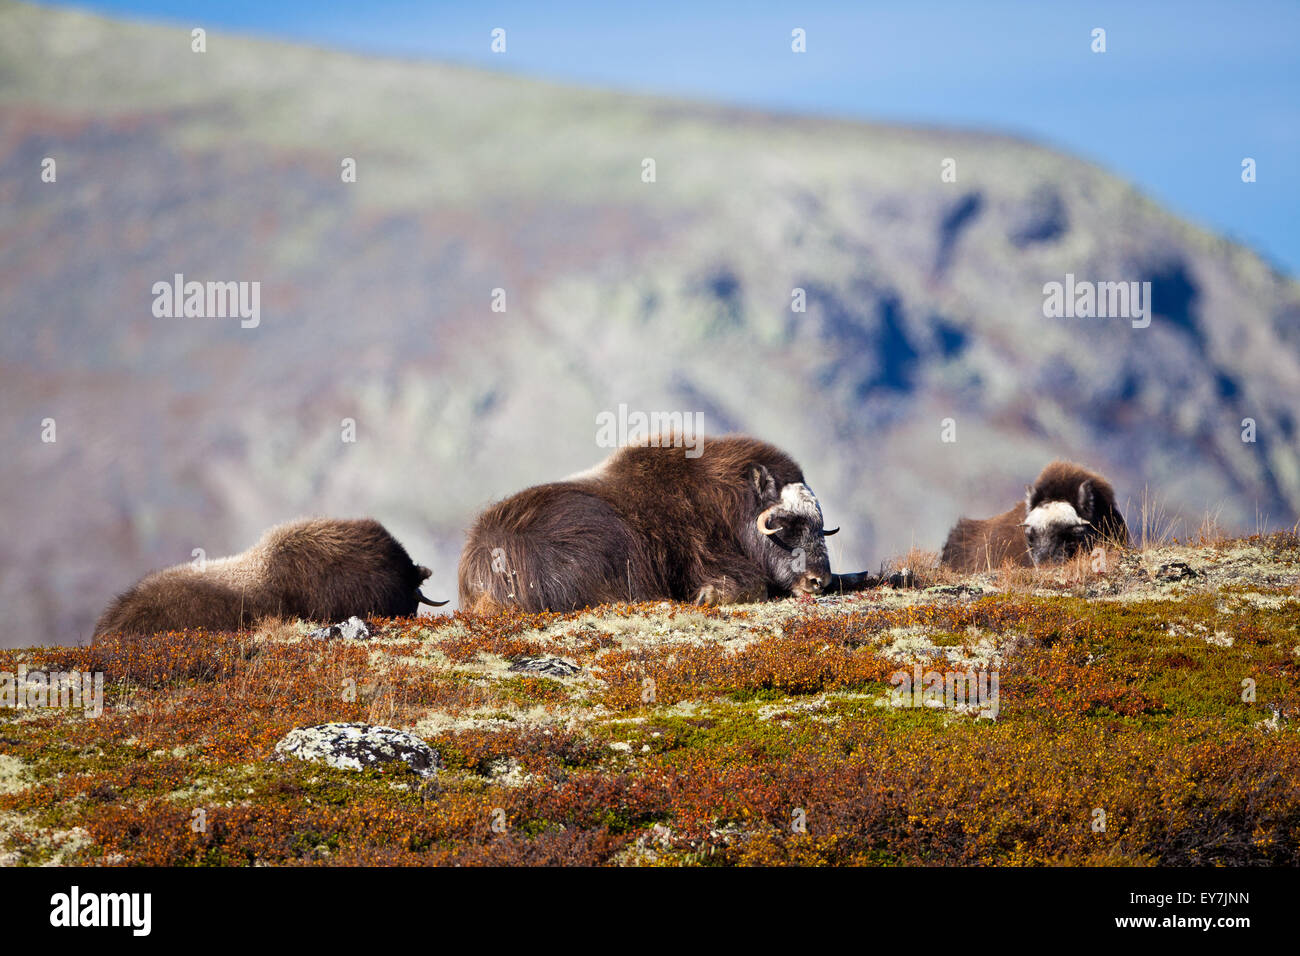 Muskoxen family, Ovibos moschatus, in Dovrefjell national park, Norway. Stock Photo